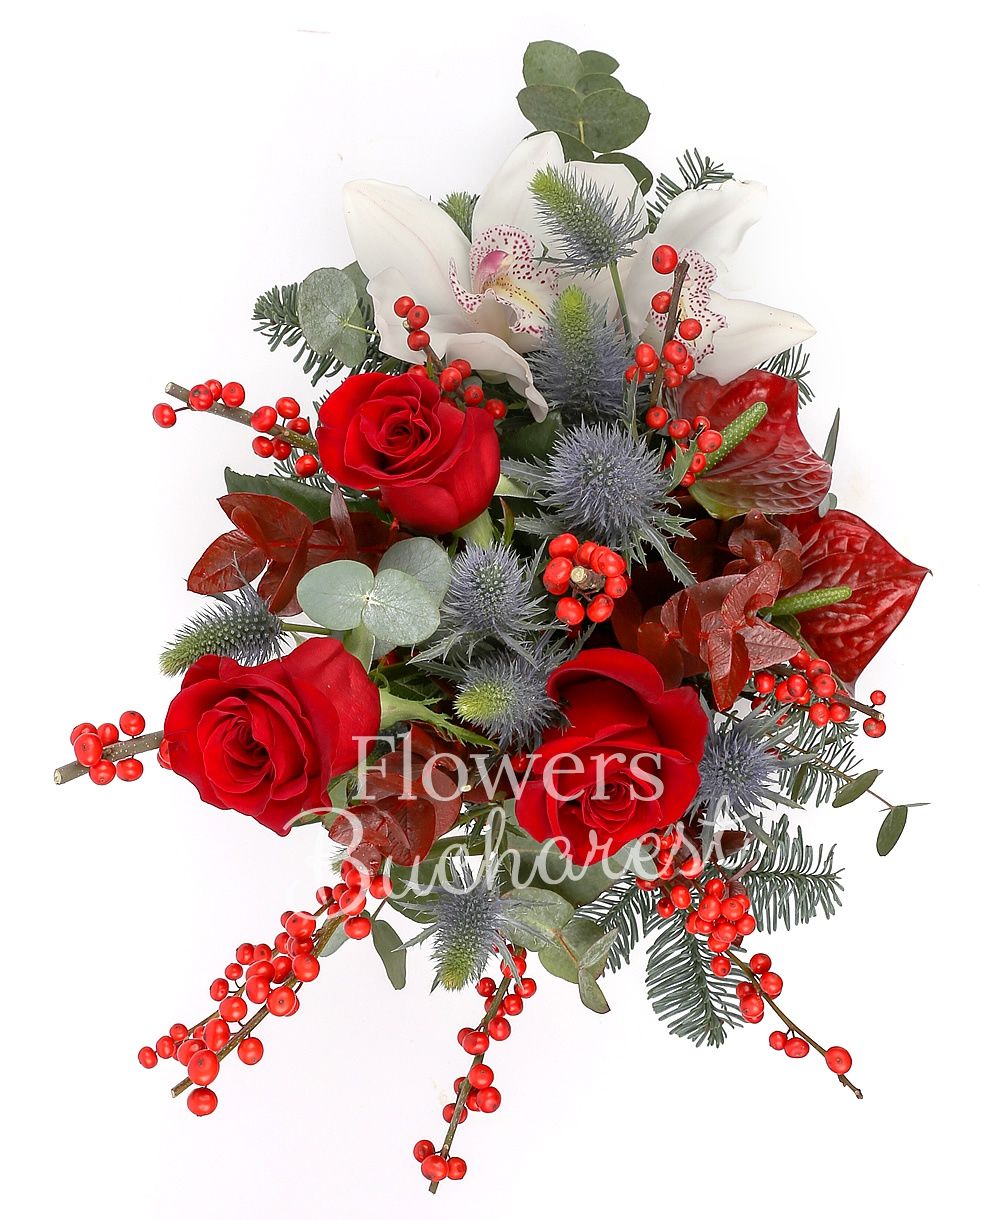 3 red roses, 1 white cymbidium, 2 red anthurium, eryngium, ilex, fir, greenery, vase